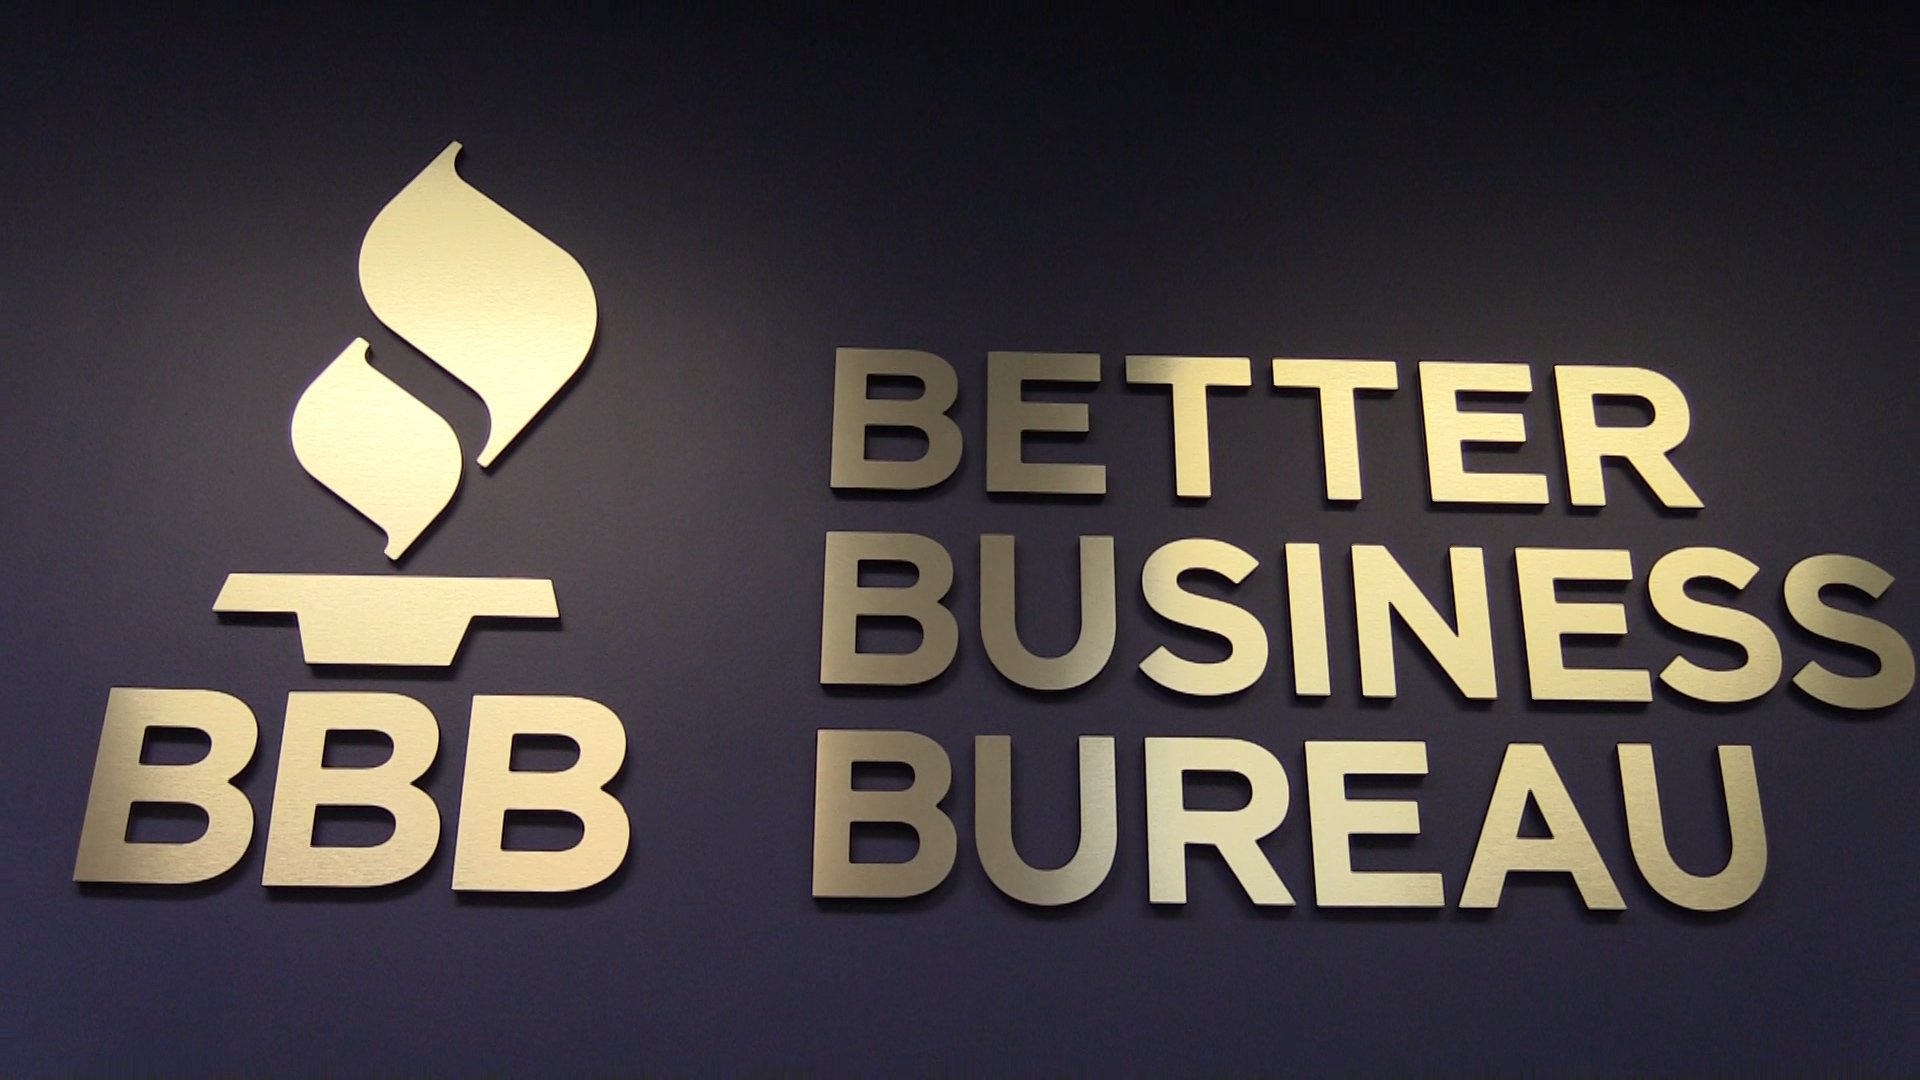 Better Business Bureau warns against afterstorm scammers 41NBC News